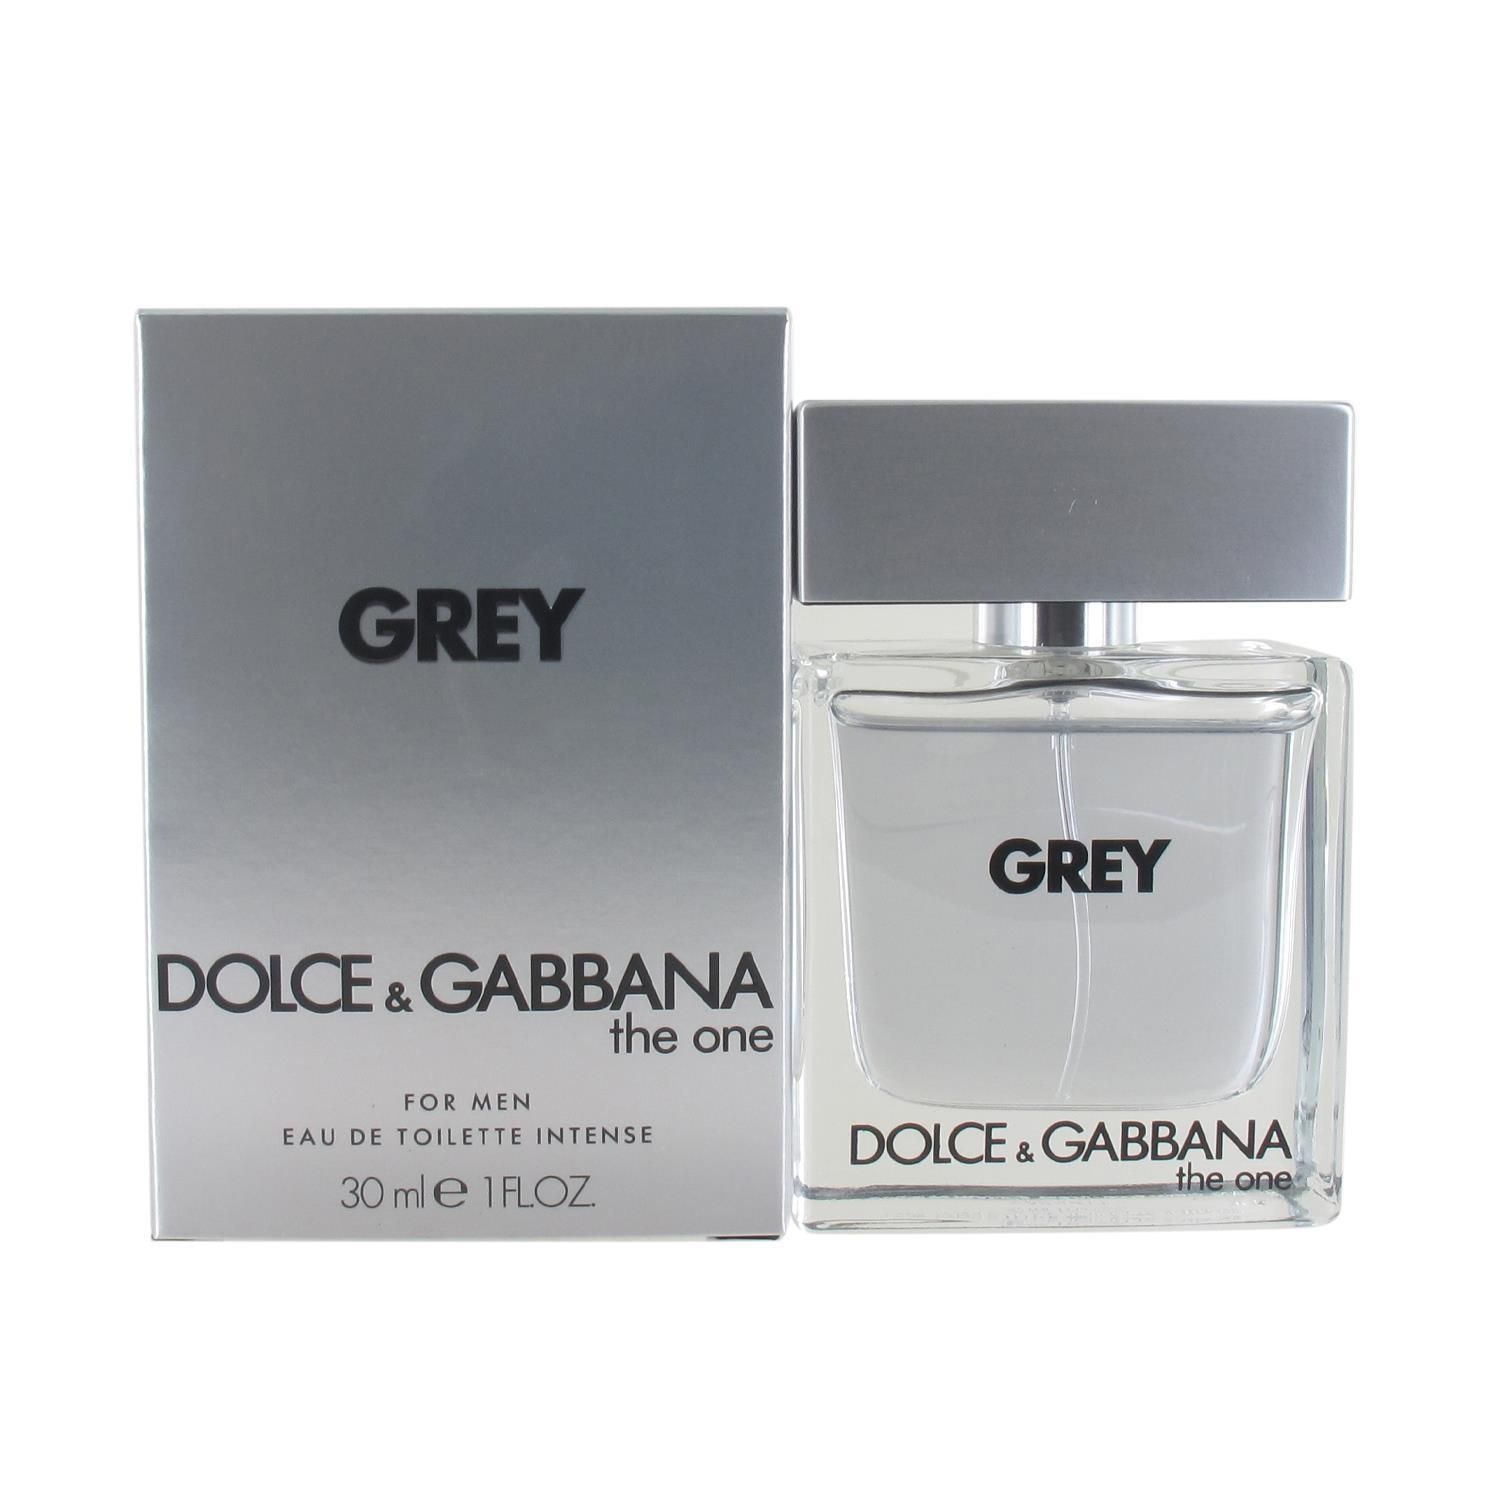 Дольче габбана мужские отзывы. Dolce Gabbana 30 ml the one. Дольче Габбана the one Grey intense. D&G the one Grey for men intense EDT (M). Dolce & Gabbana - the one Grey - Eau de Toilette.